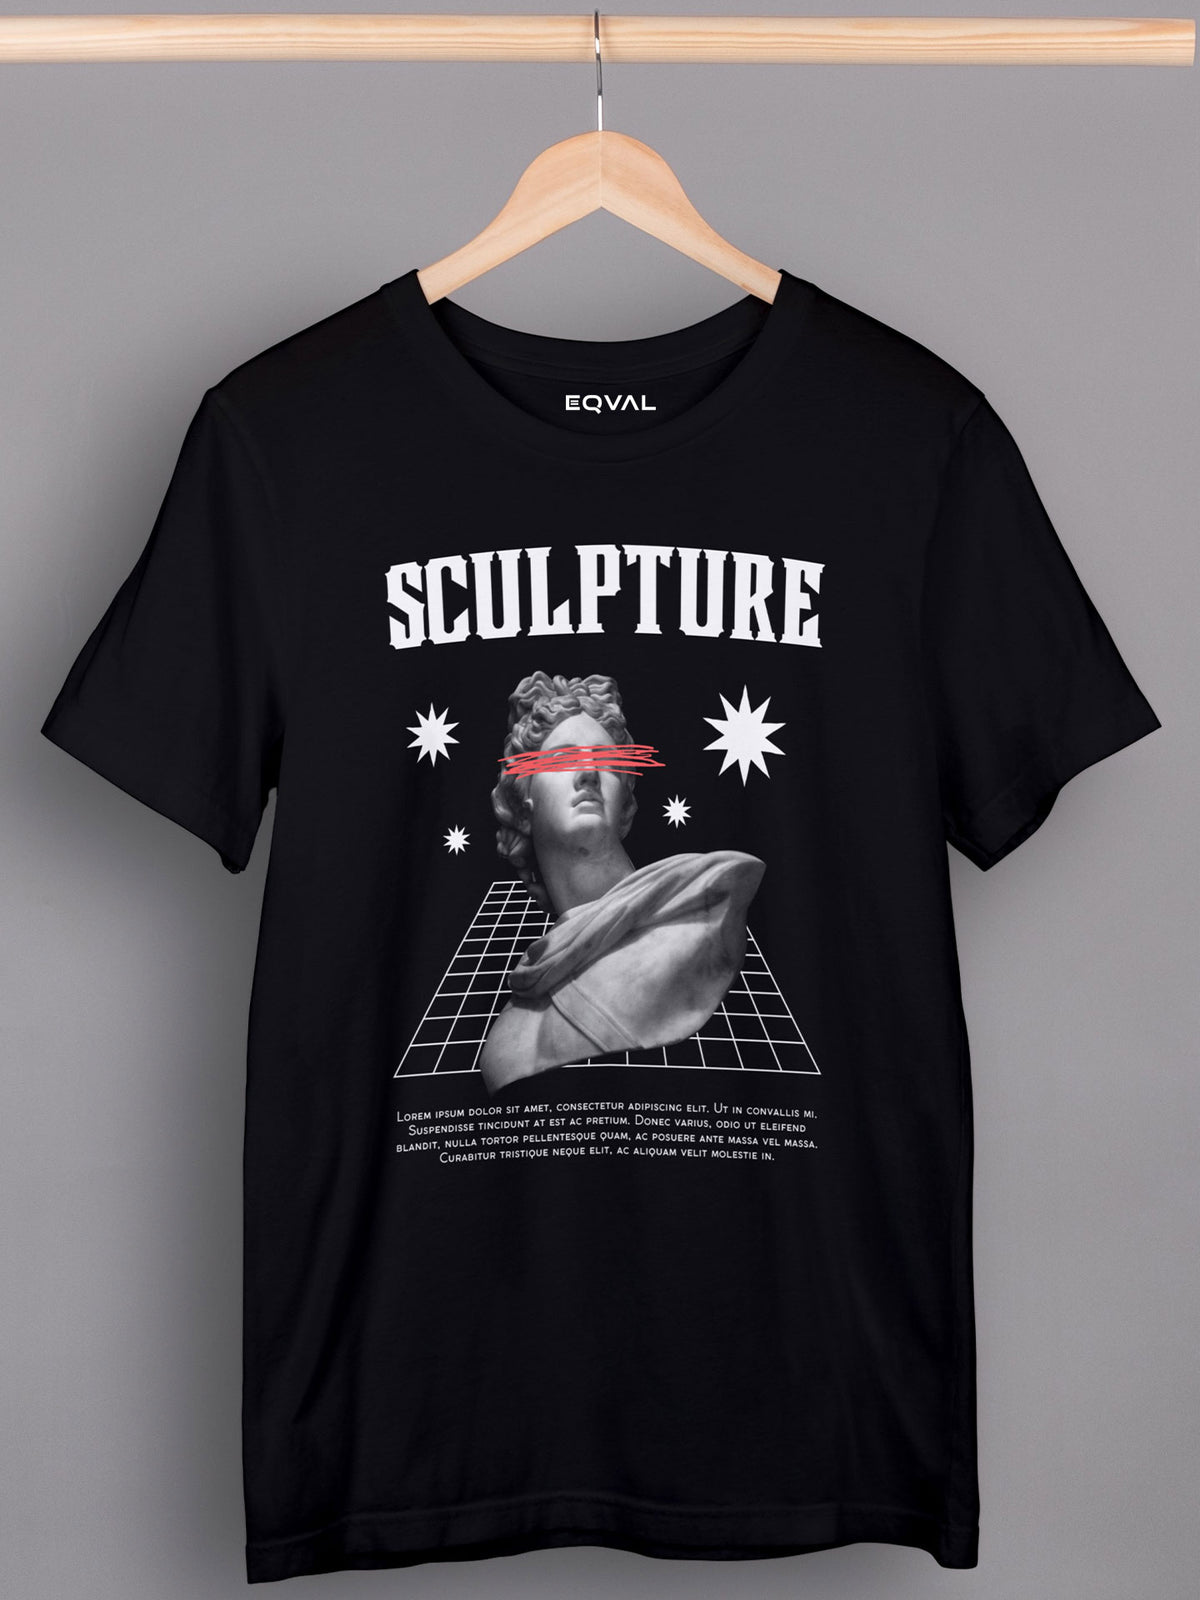 Men's Black Sculpture Printed T-shirt